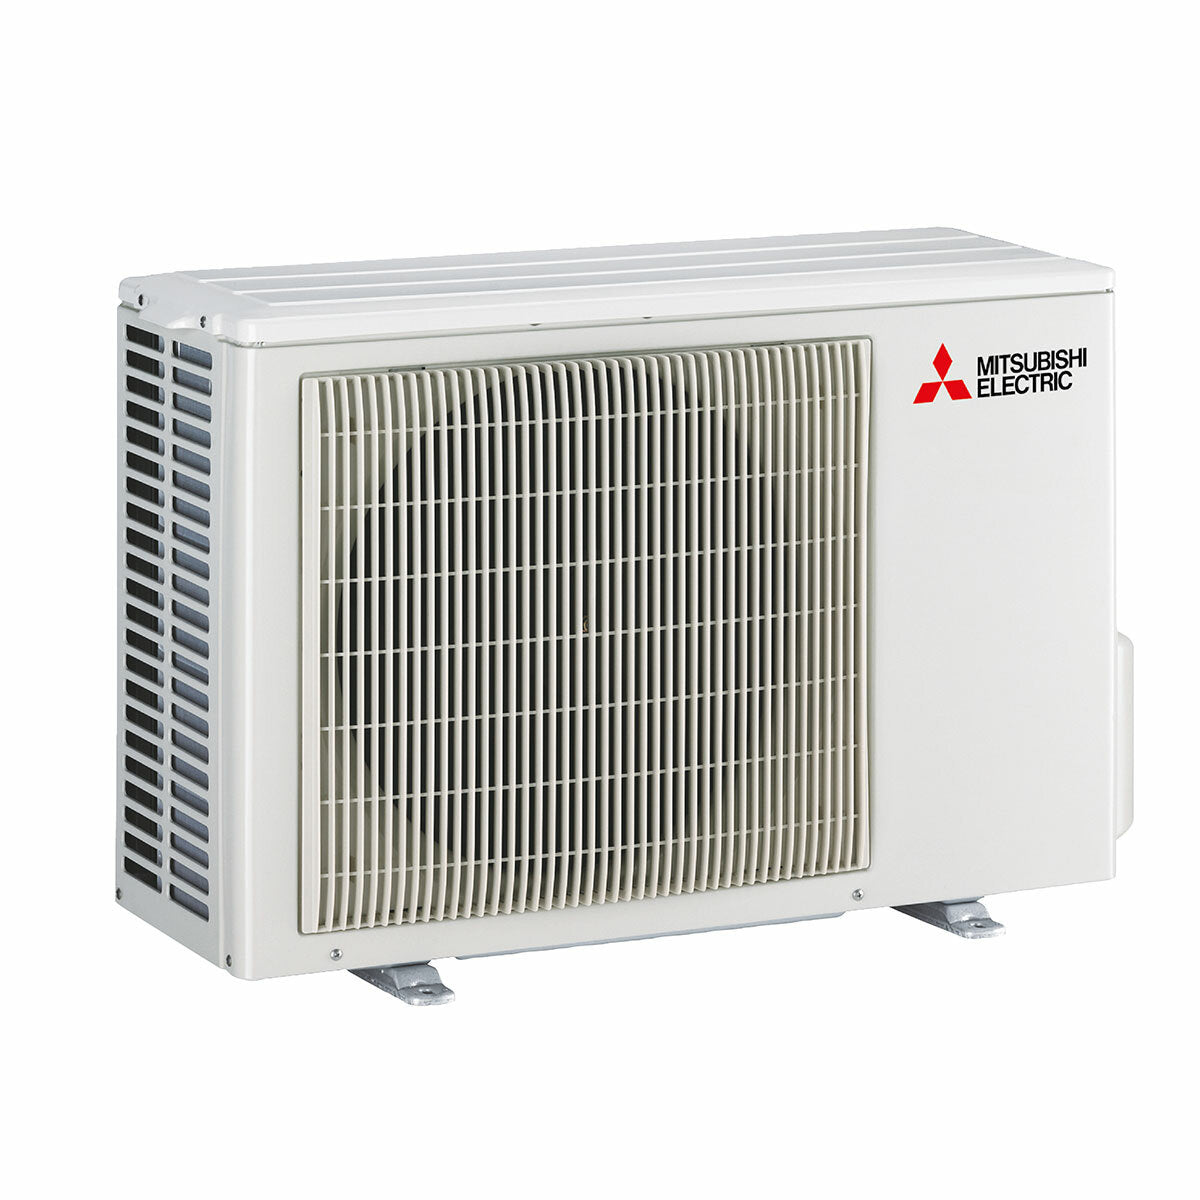 Mitsubishi Electric Air Conditioner AY Series 9000 BTU R32 inverter A+++ wifi